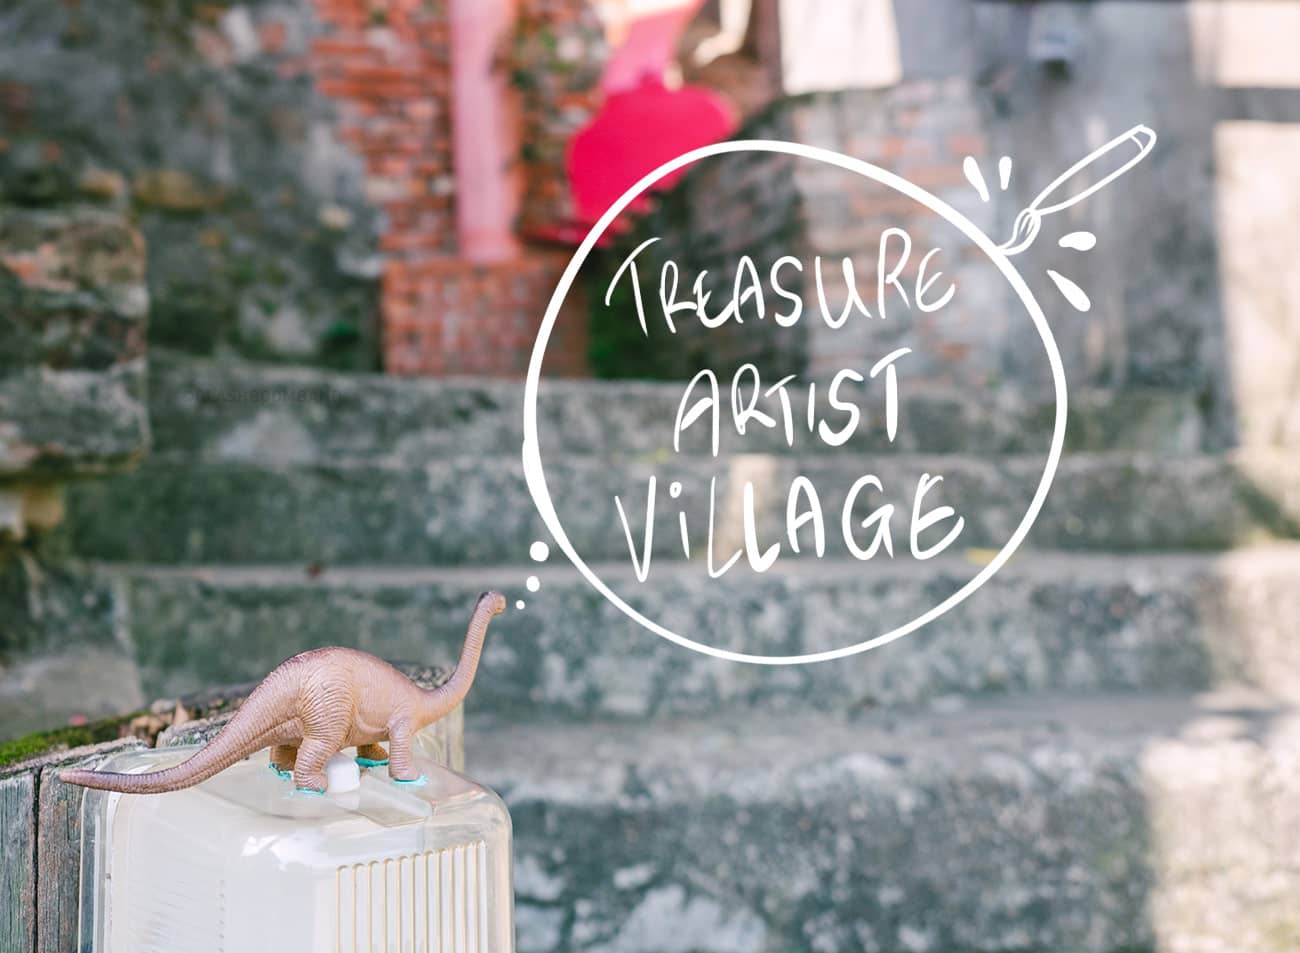 Treasure Hill Artist Village - Entrance with dinosaur